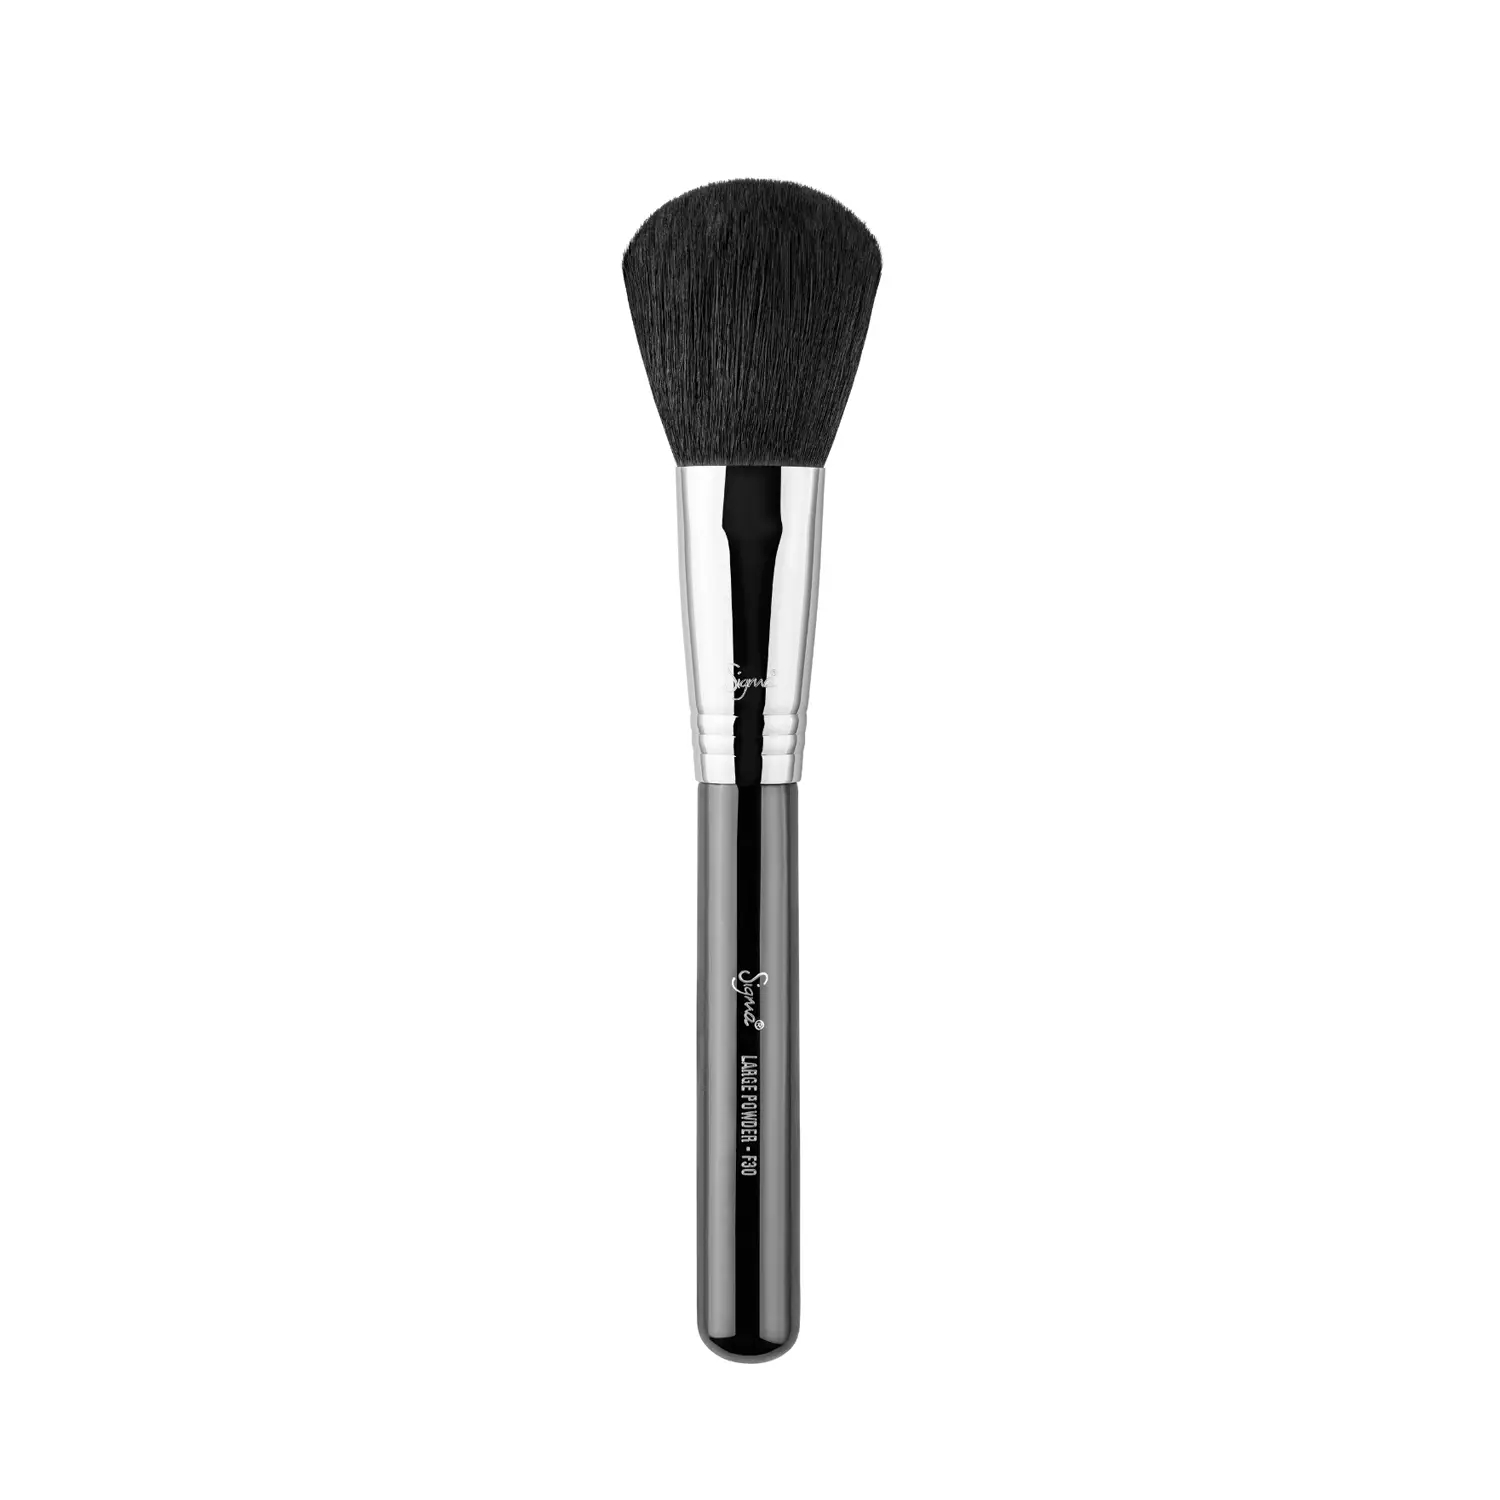 Sigma Beauty F30 Large Powder Brush - Black/Chrome